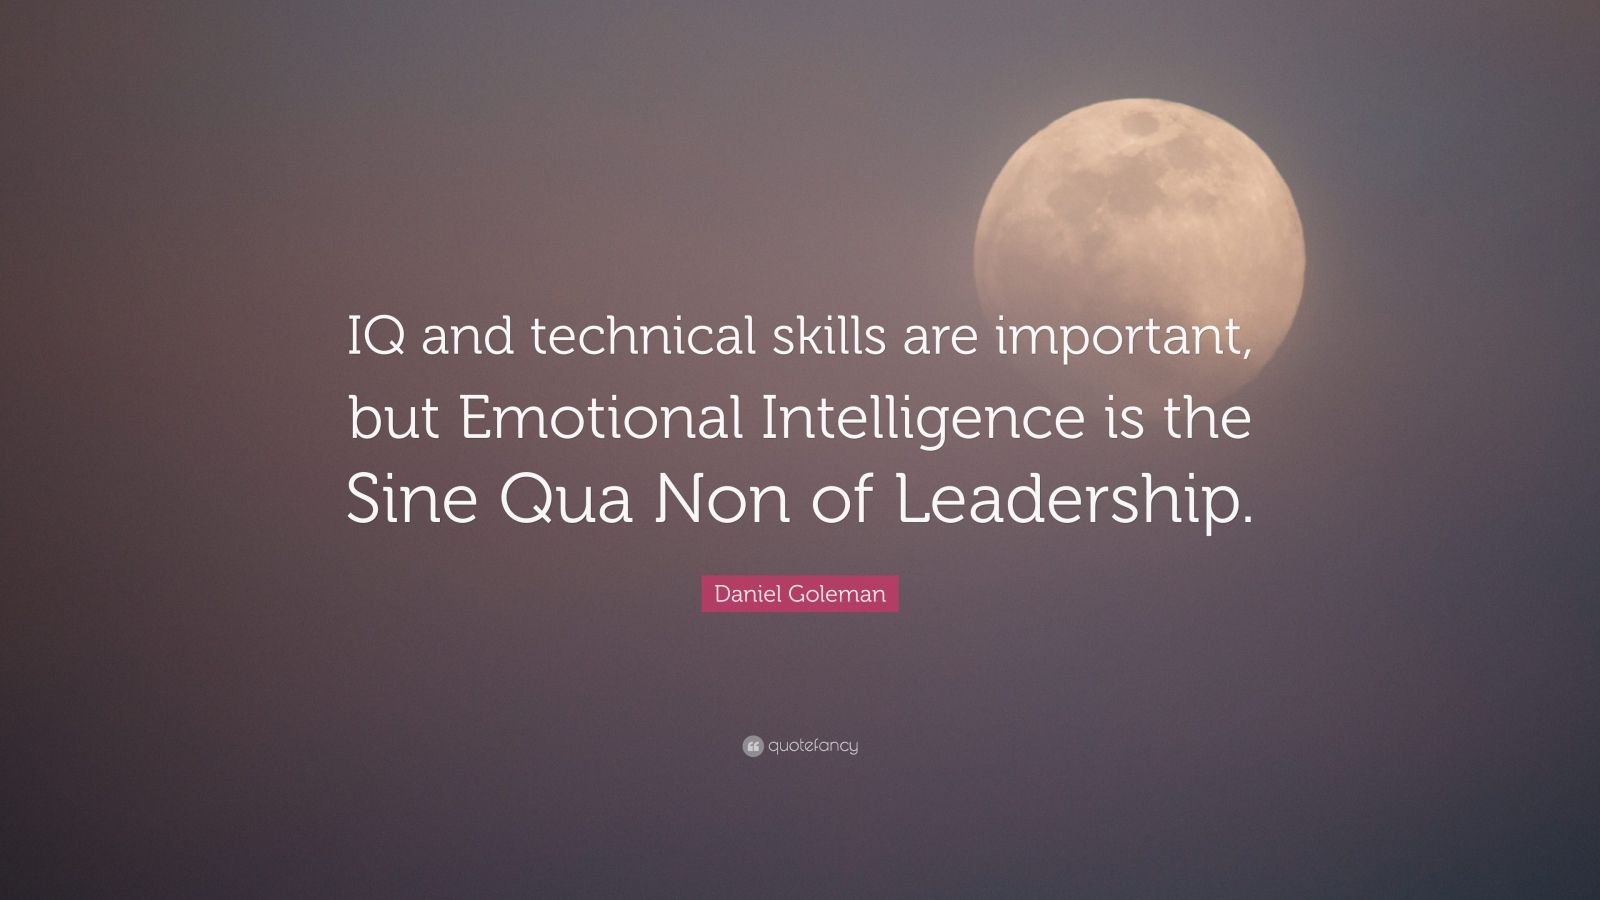 Daniel Goleman Quote “IQ and technical skills are